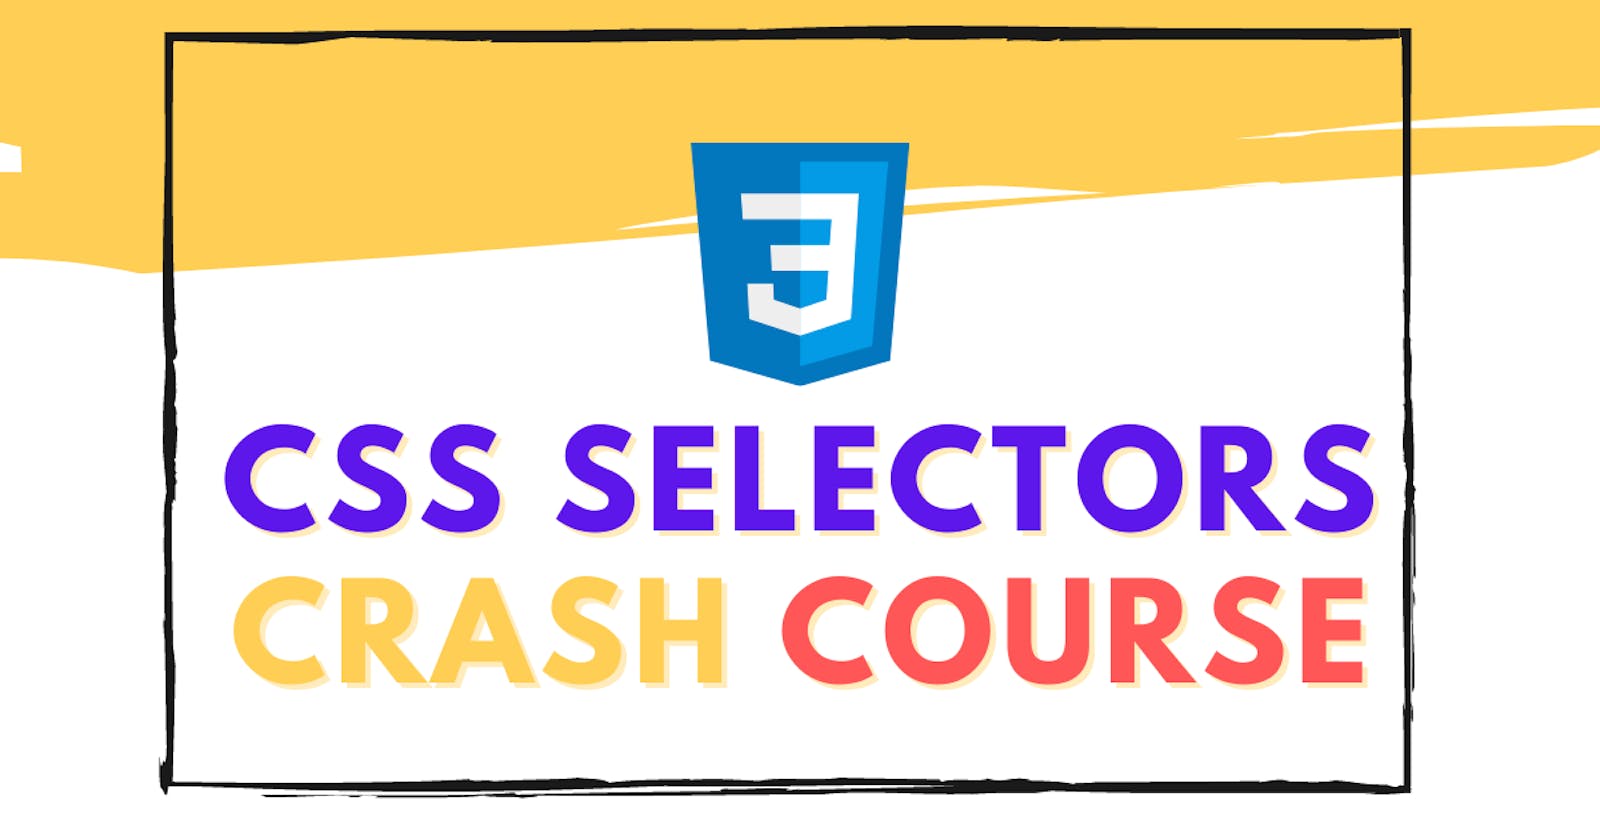 CSS Selectors crash course